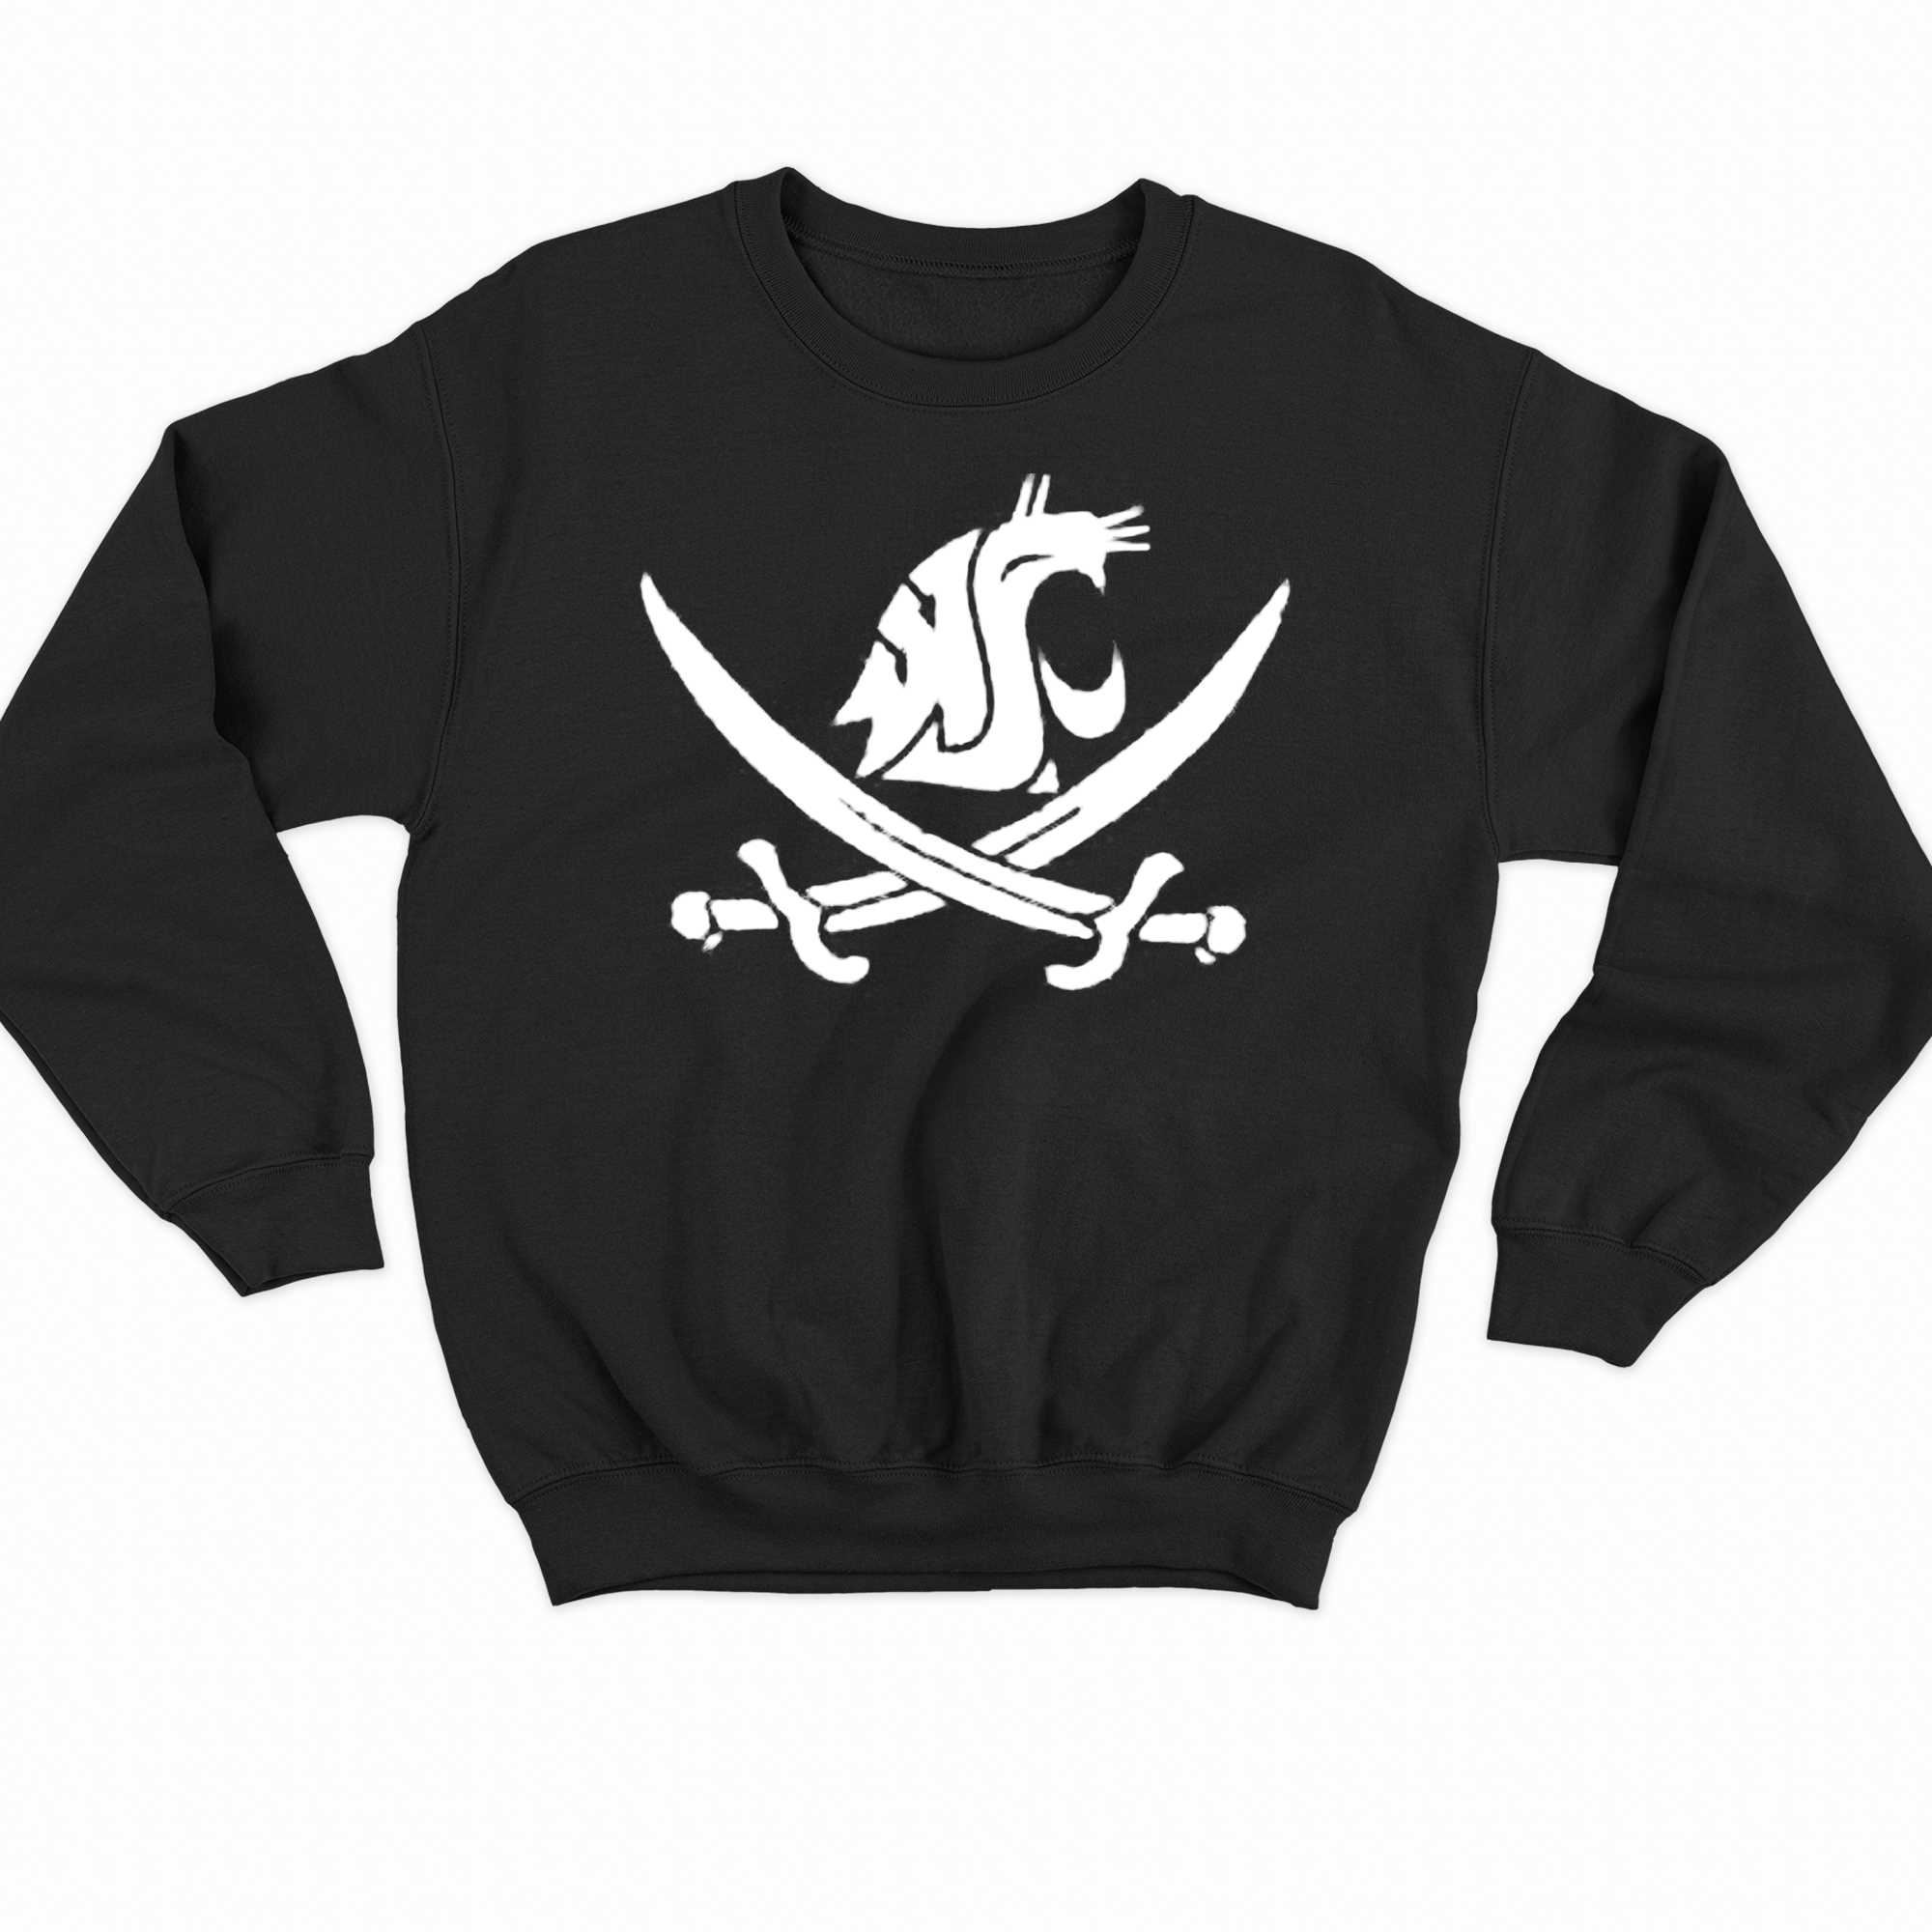 Original Wsu Pirate Swing Your Sword Shirts Hoodie Tank-Top Quotes